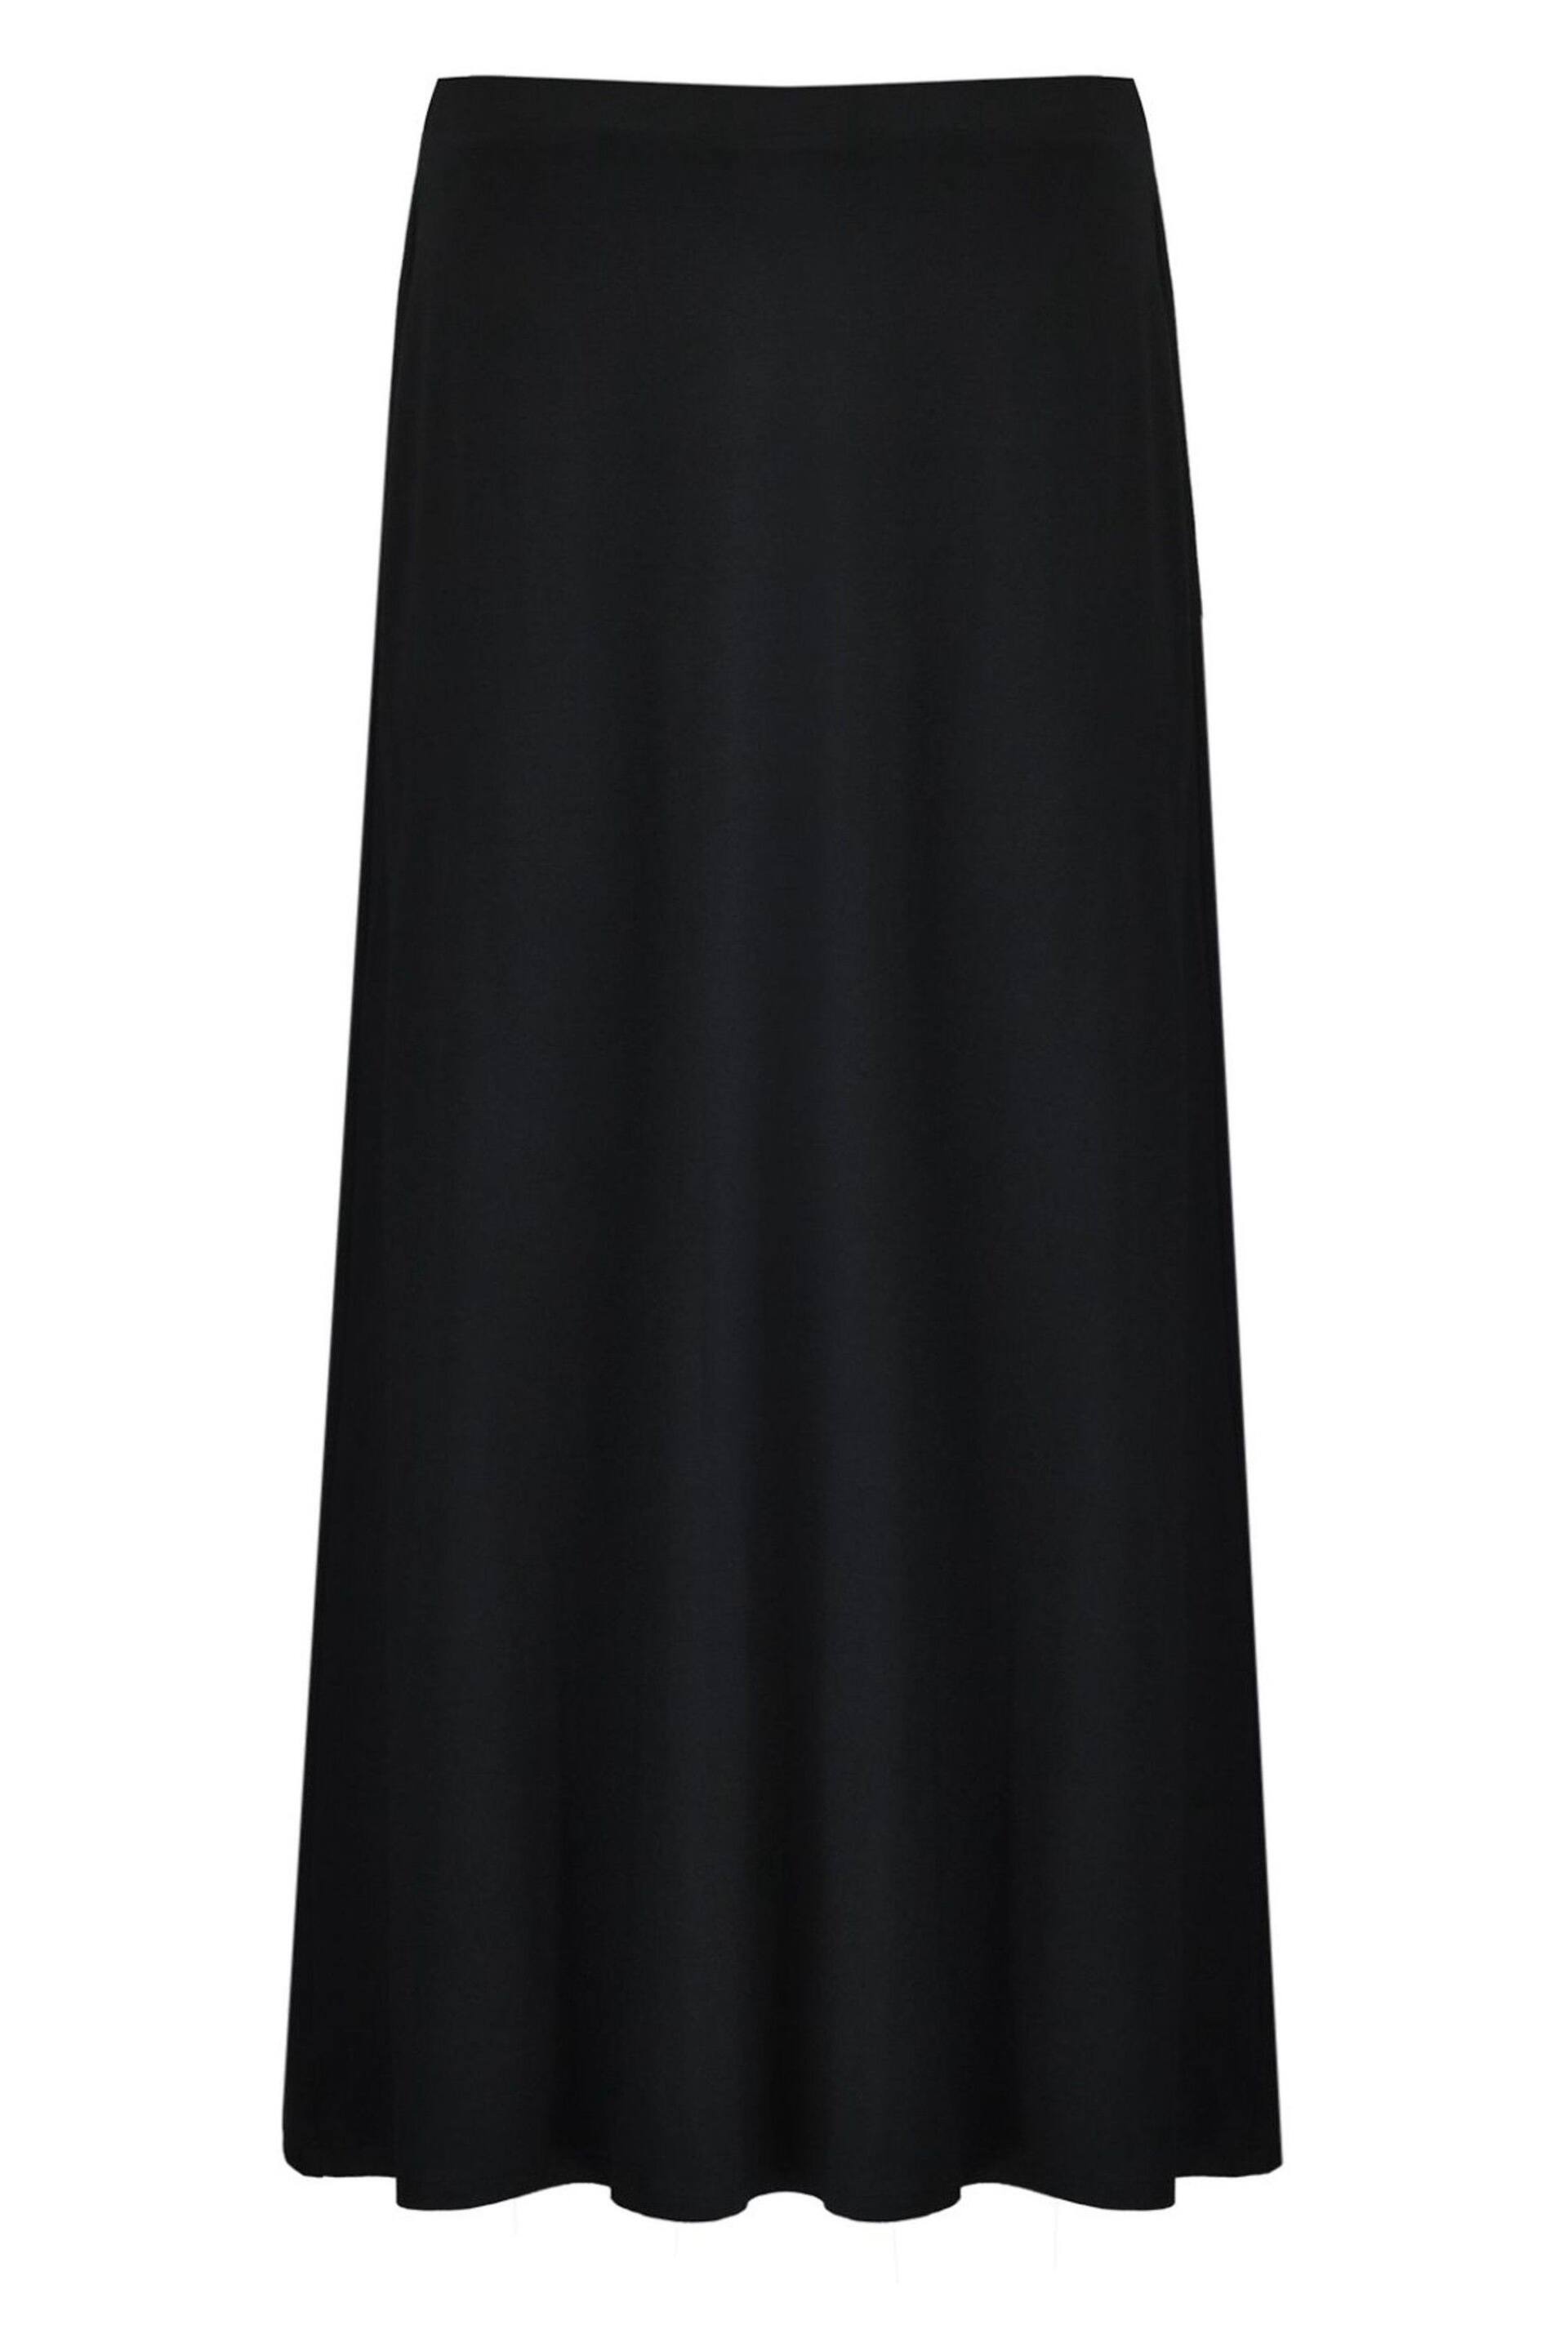 Live Unlimited Curve Petite Jersey Black Midi Skirt - Image 5 of 5